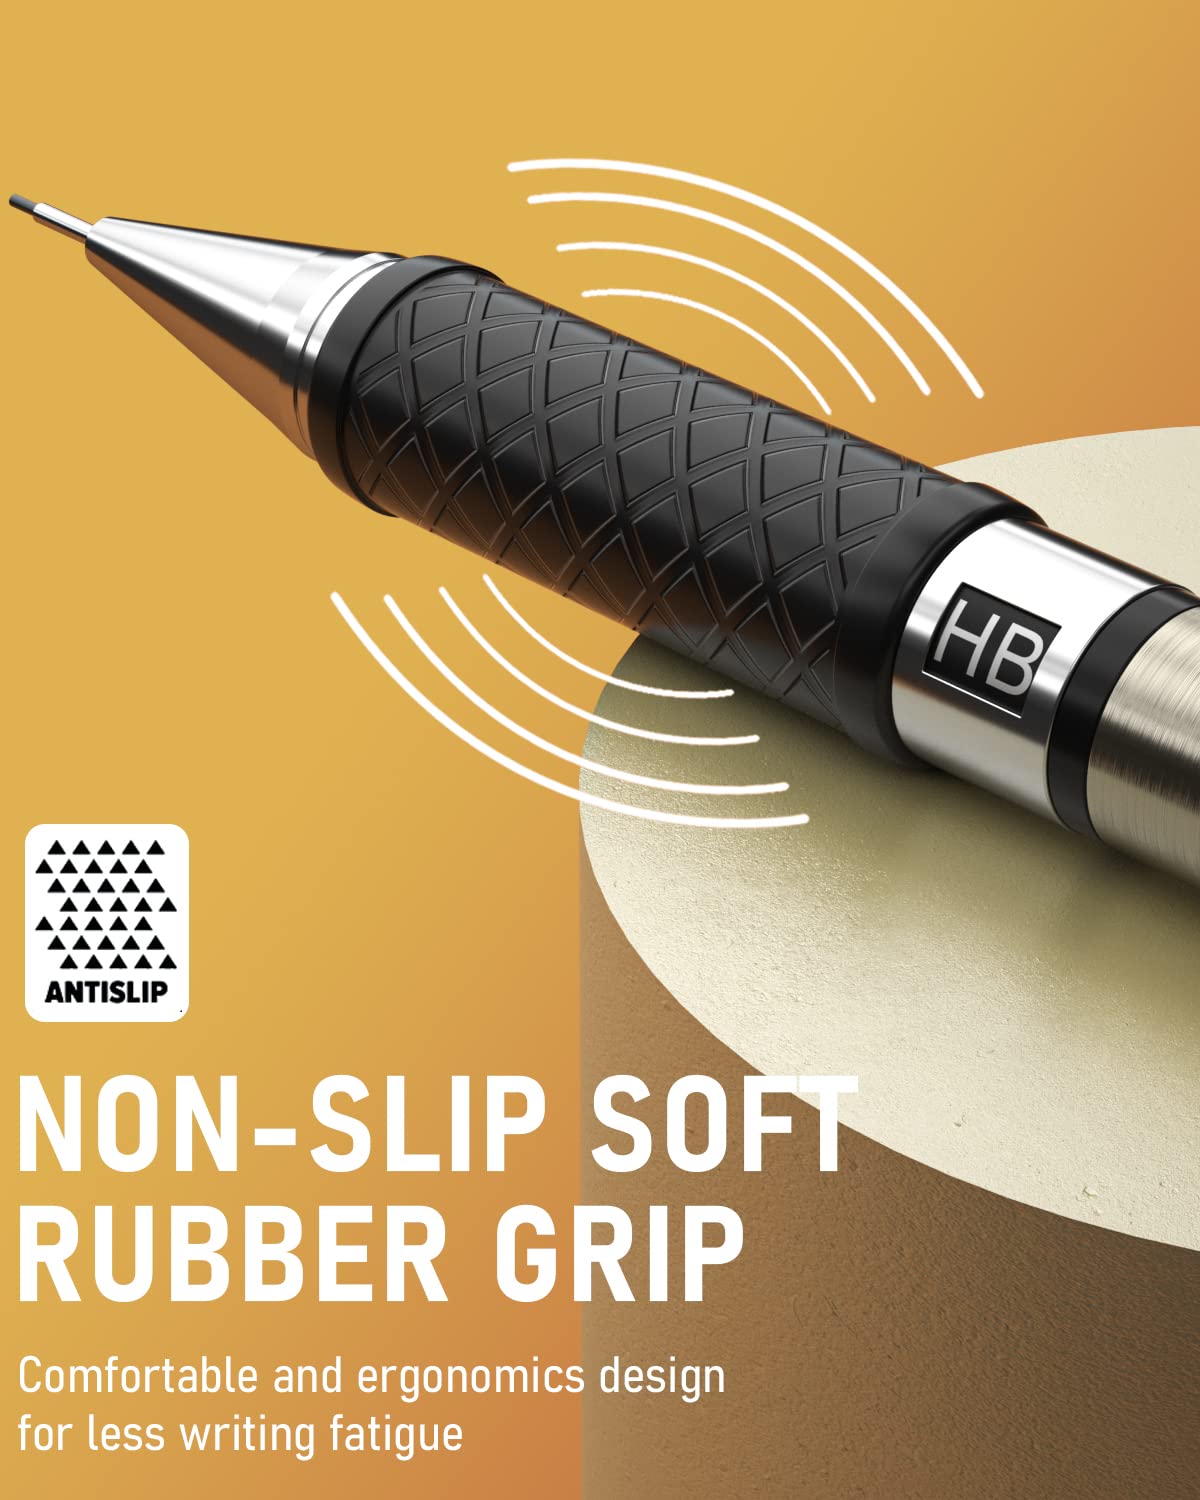 Nicpro Black Mechanical Pencils 0.5mm & 0.7 mm, Metal Lead Pencil Set